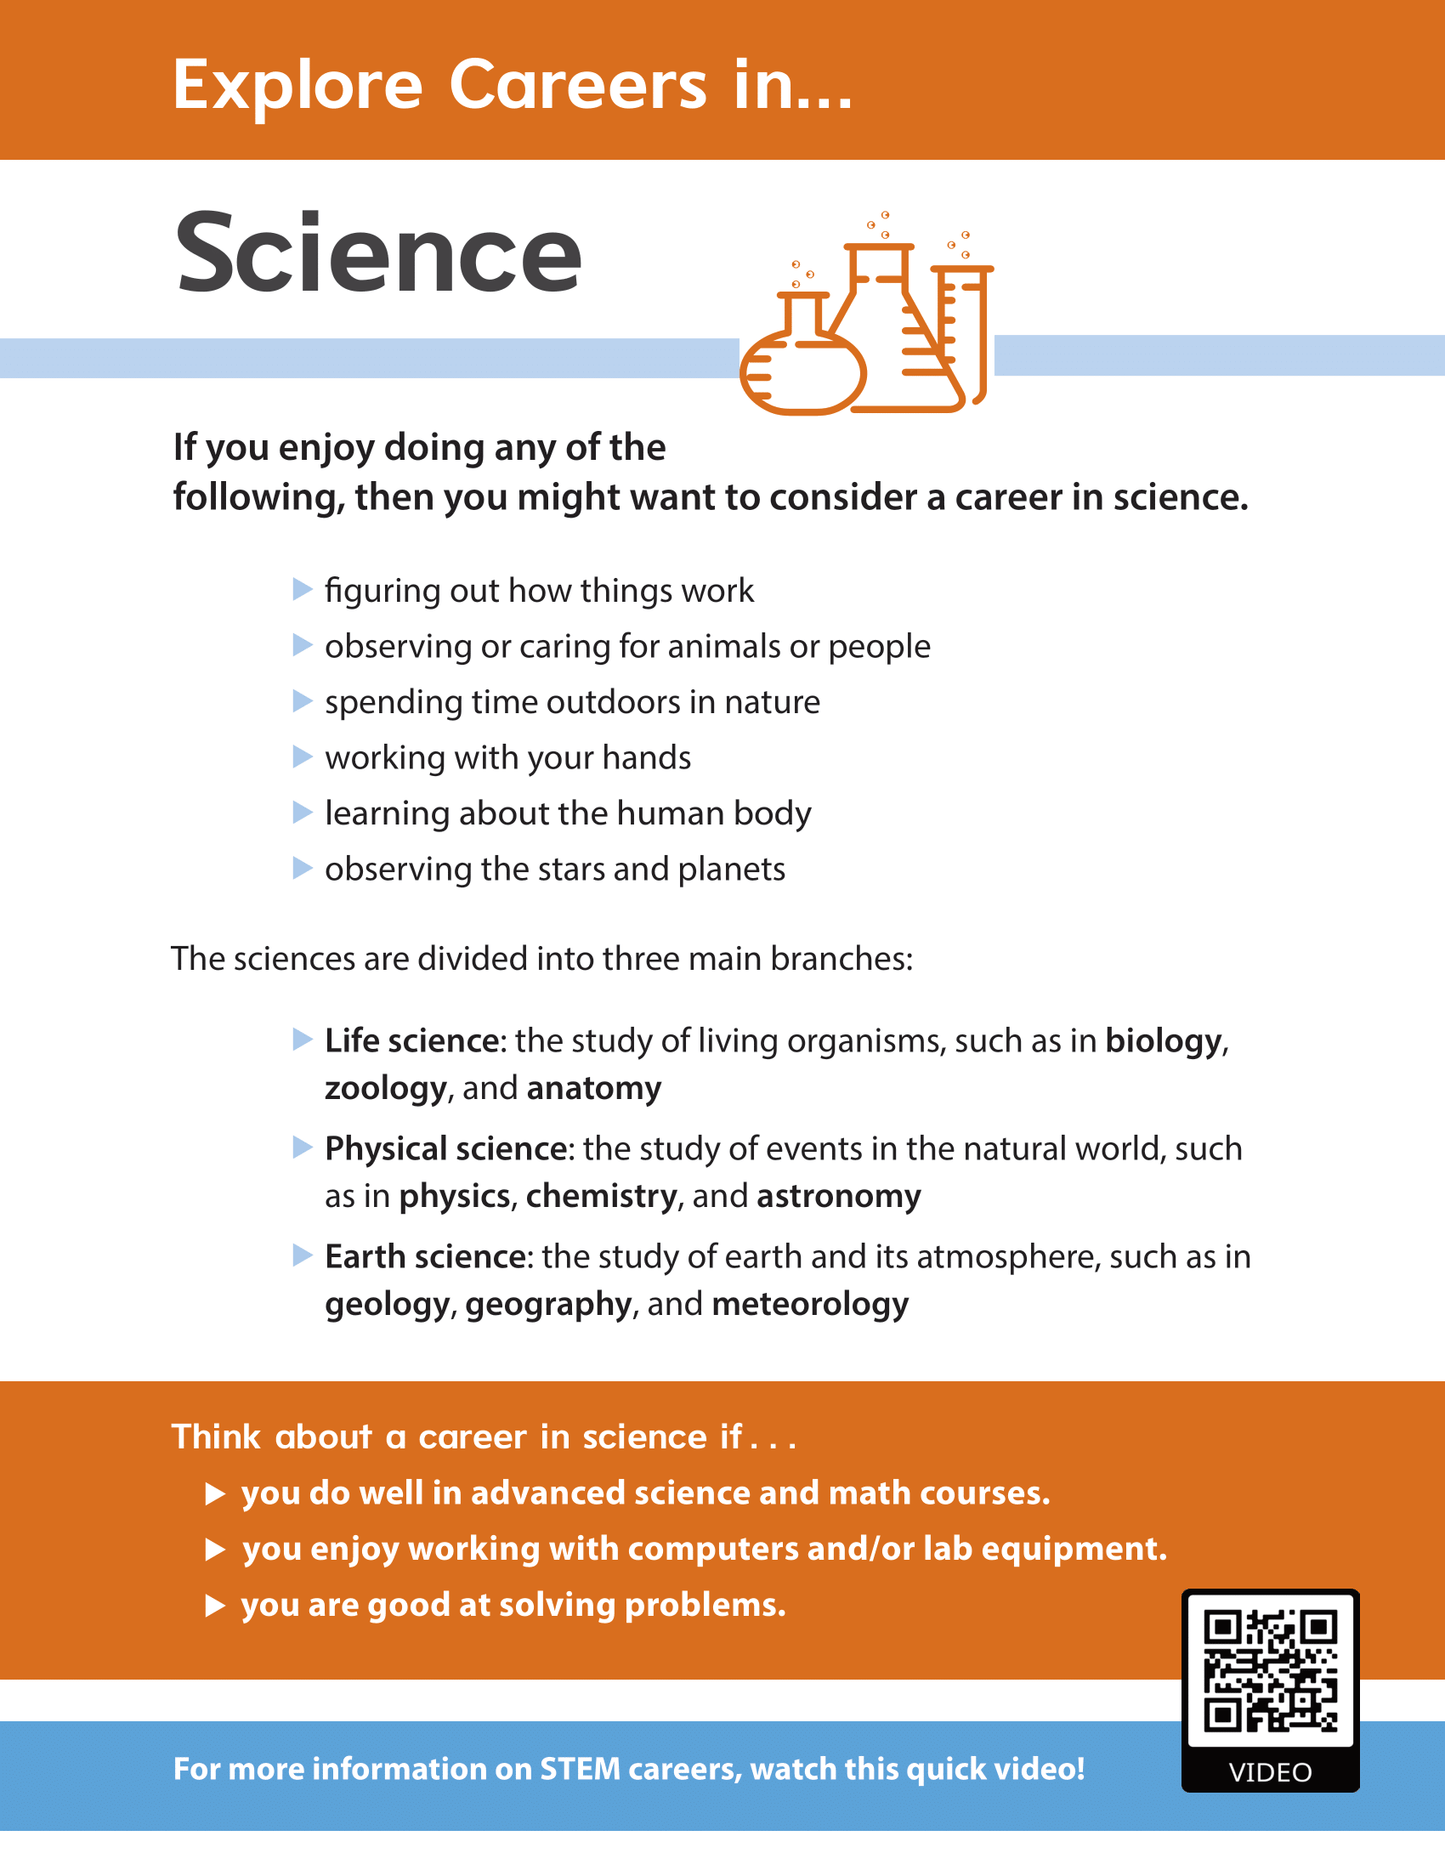 Explore Careers in Science